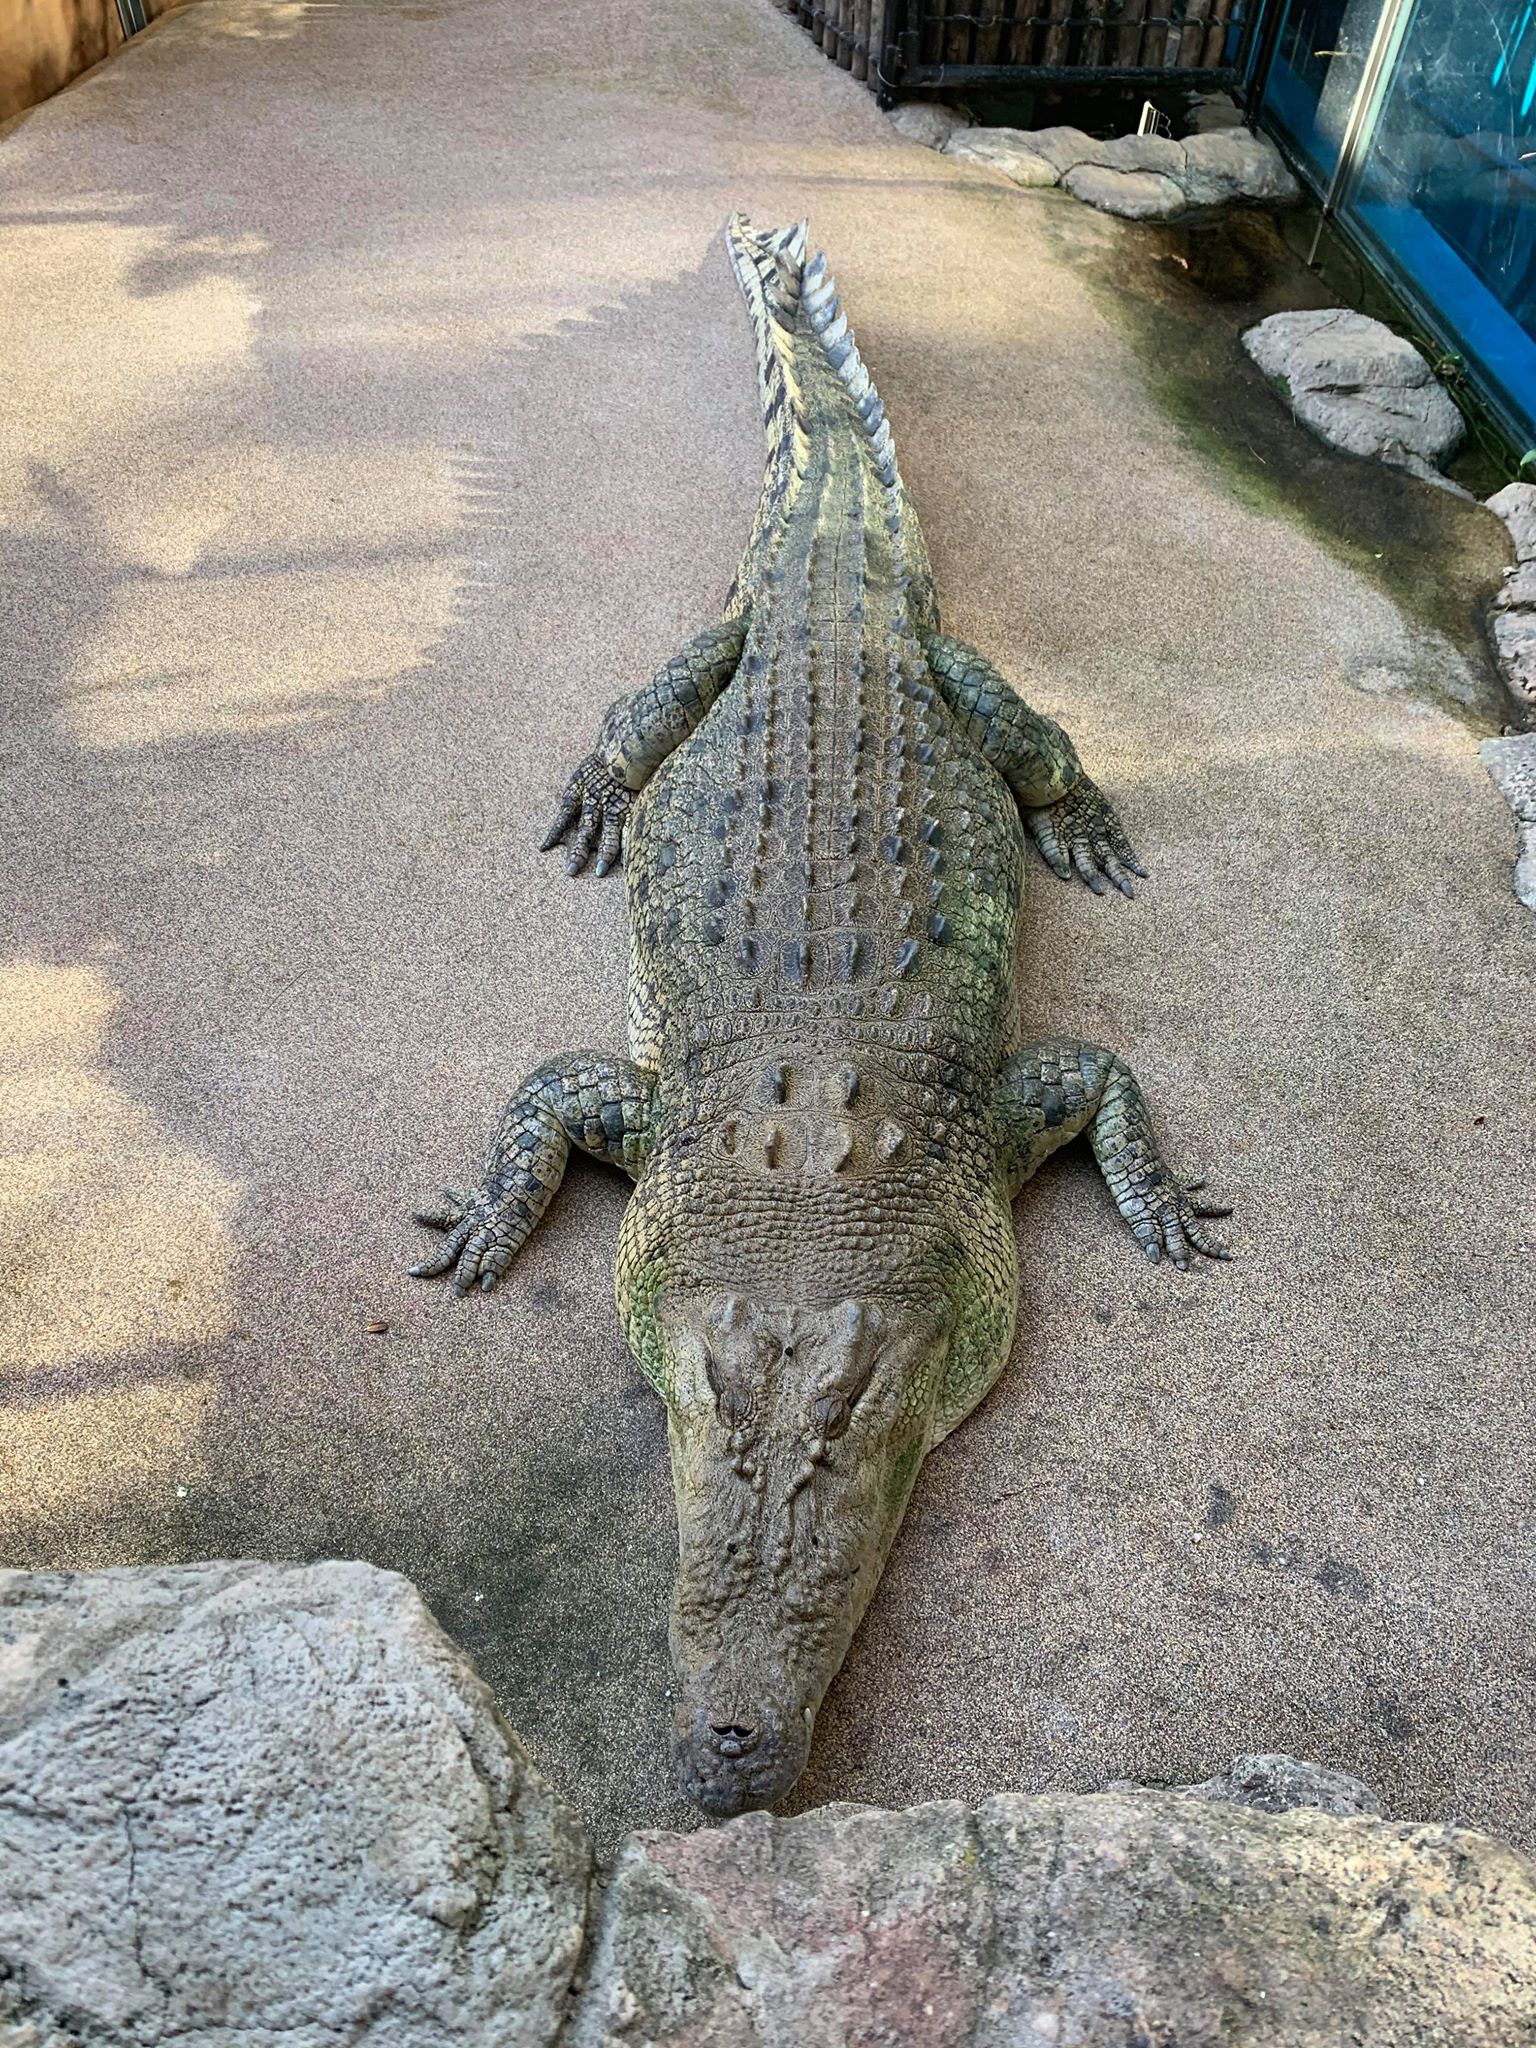 Croc On Land